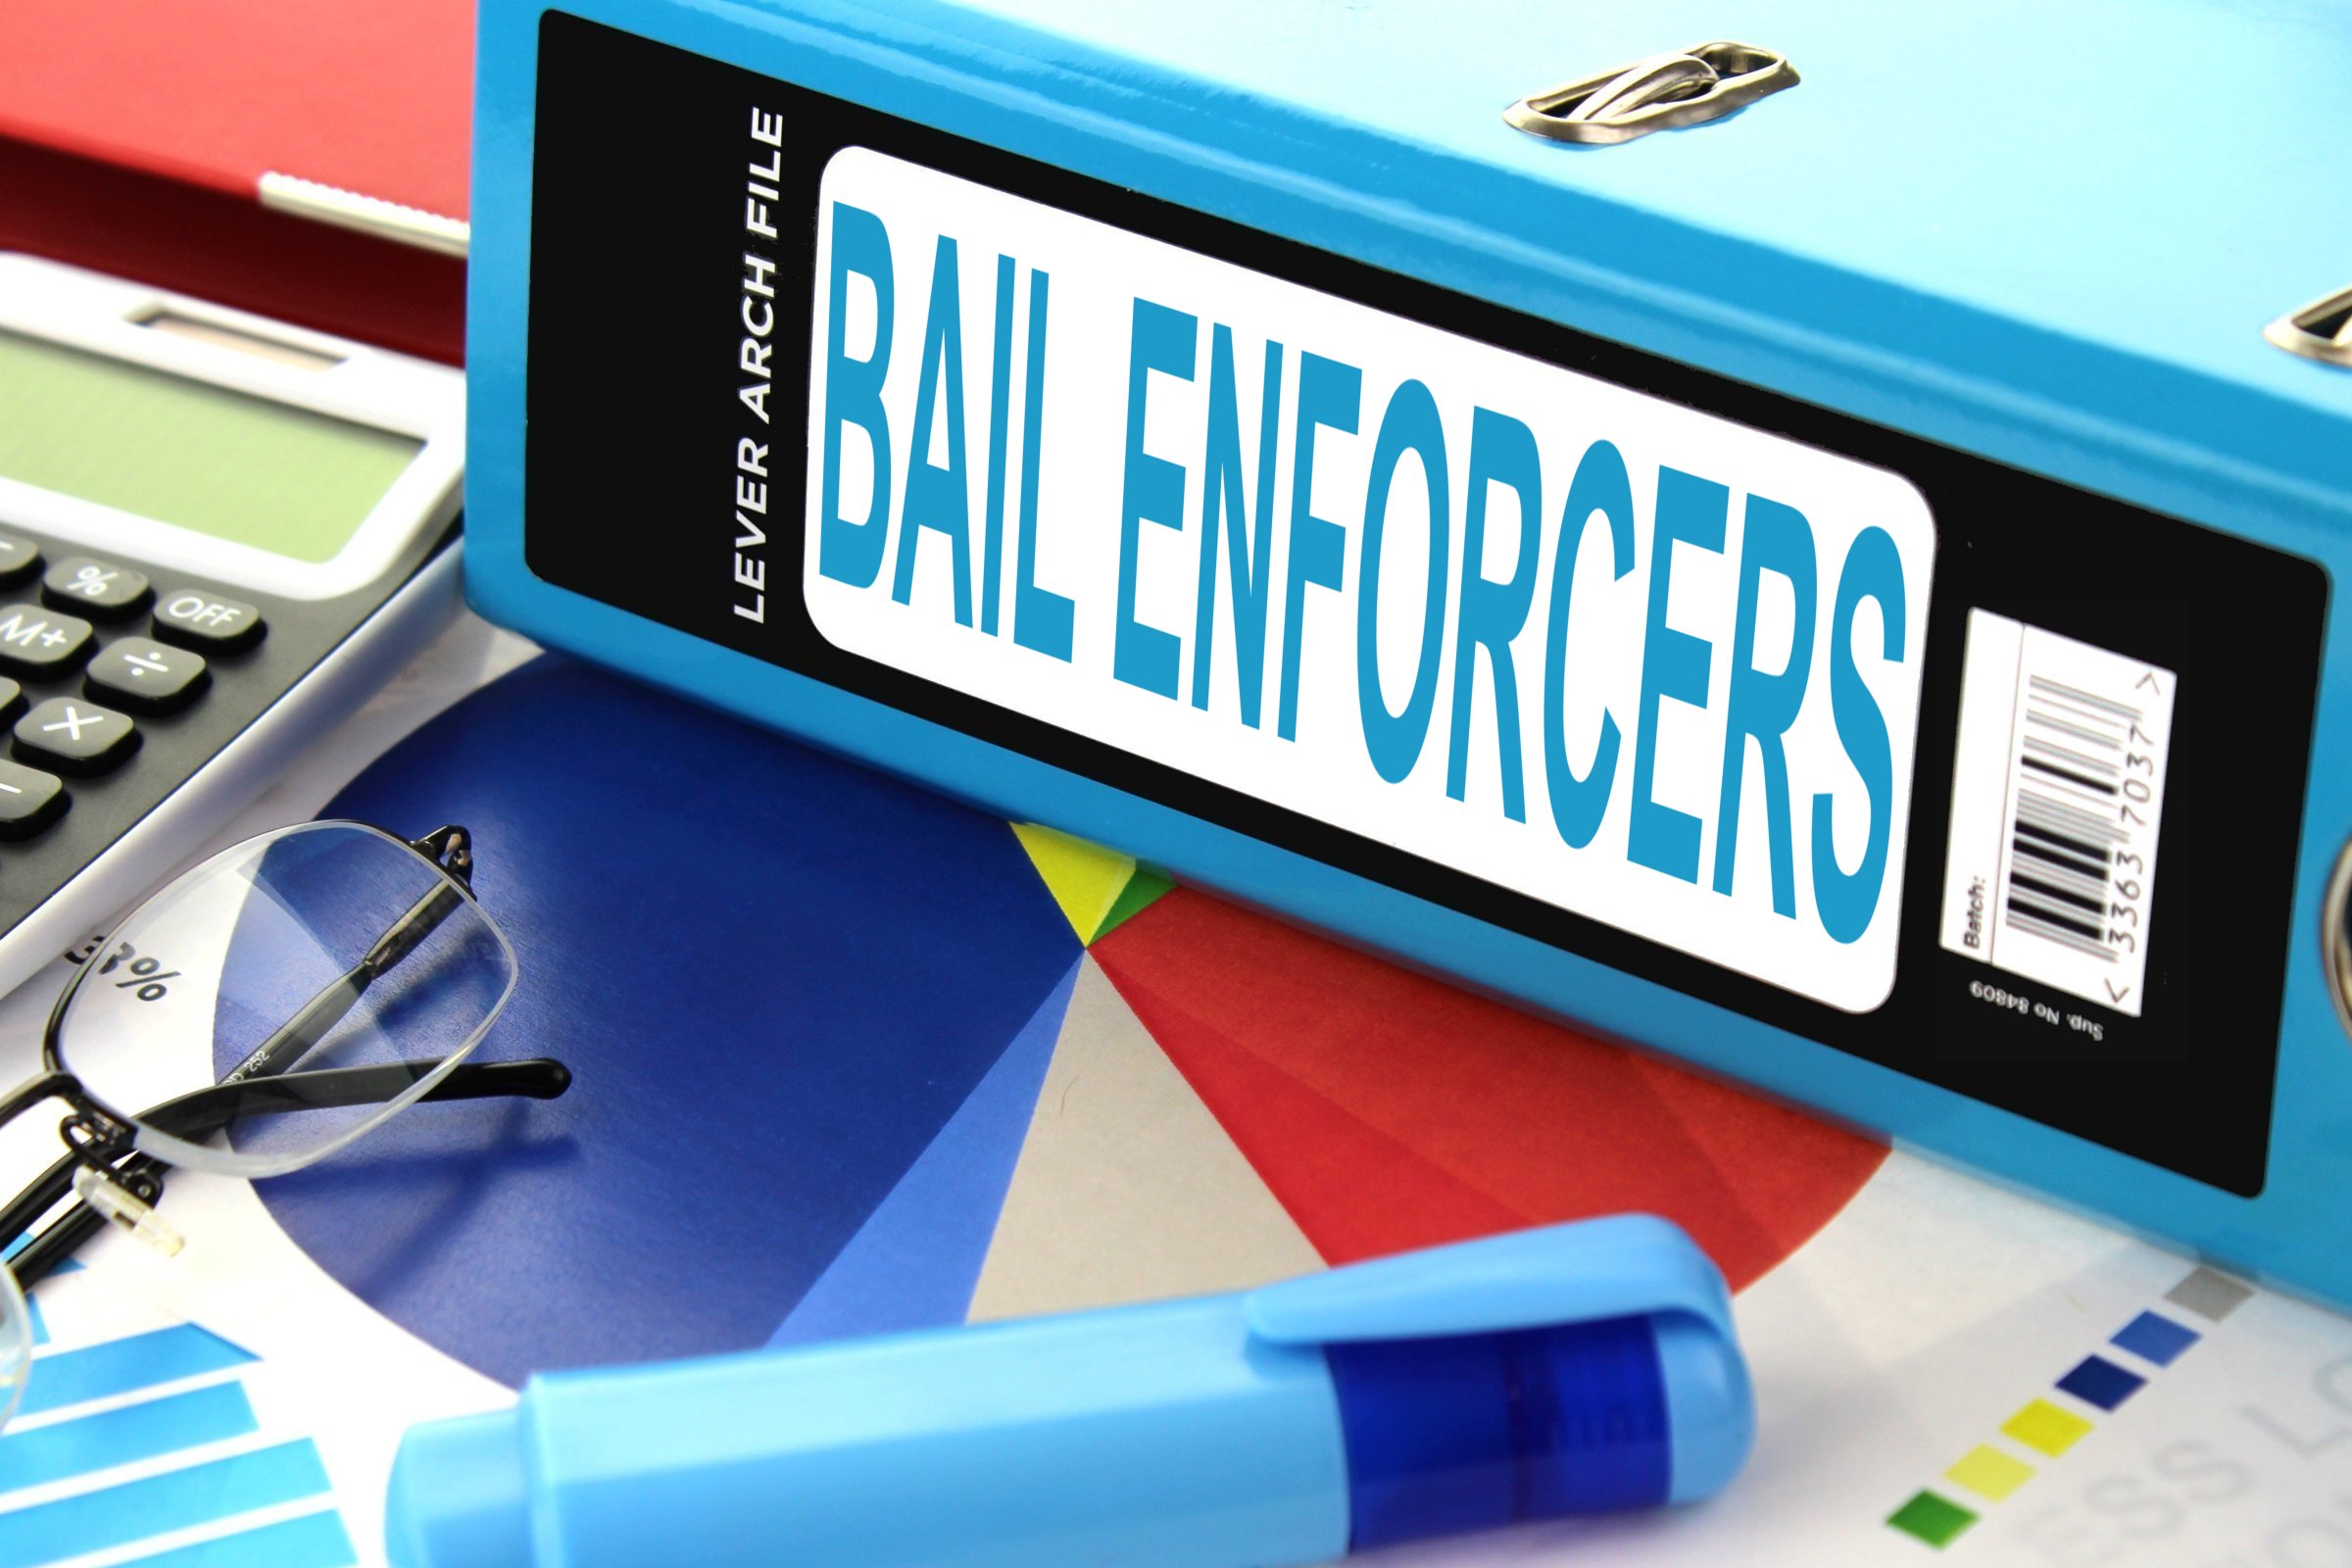 bail enforcers